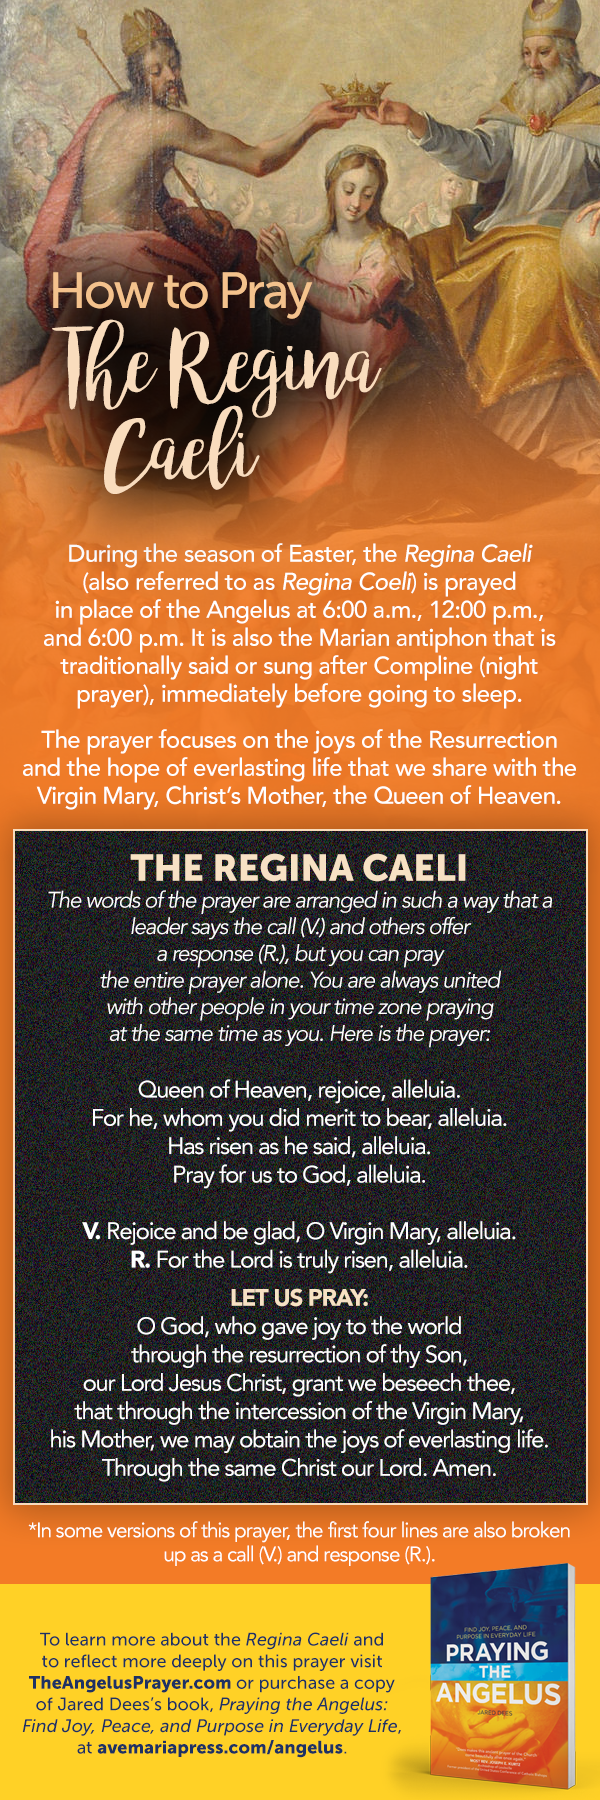 How to Pray the Regina Caeli